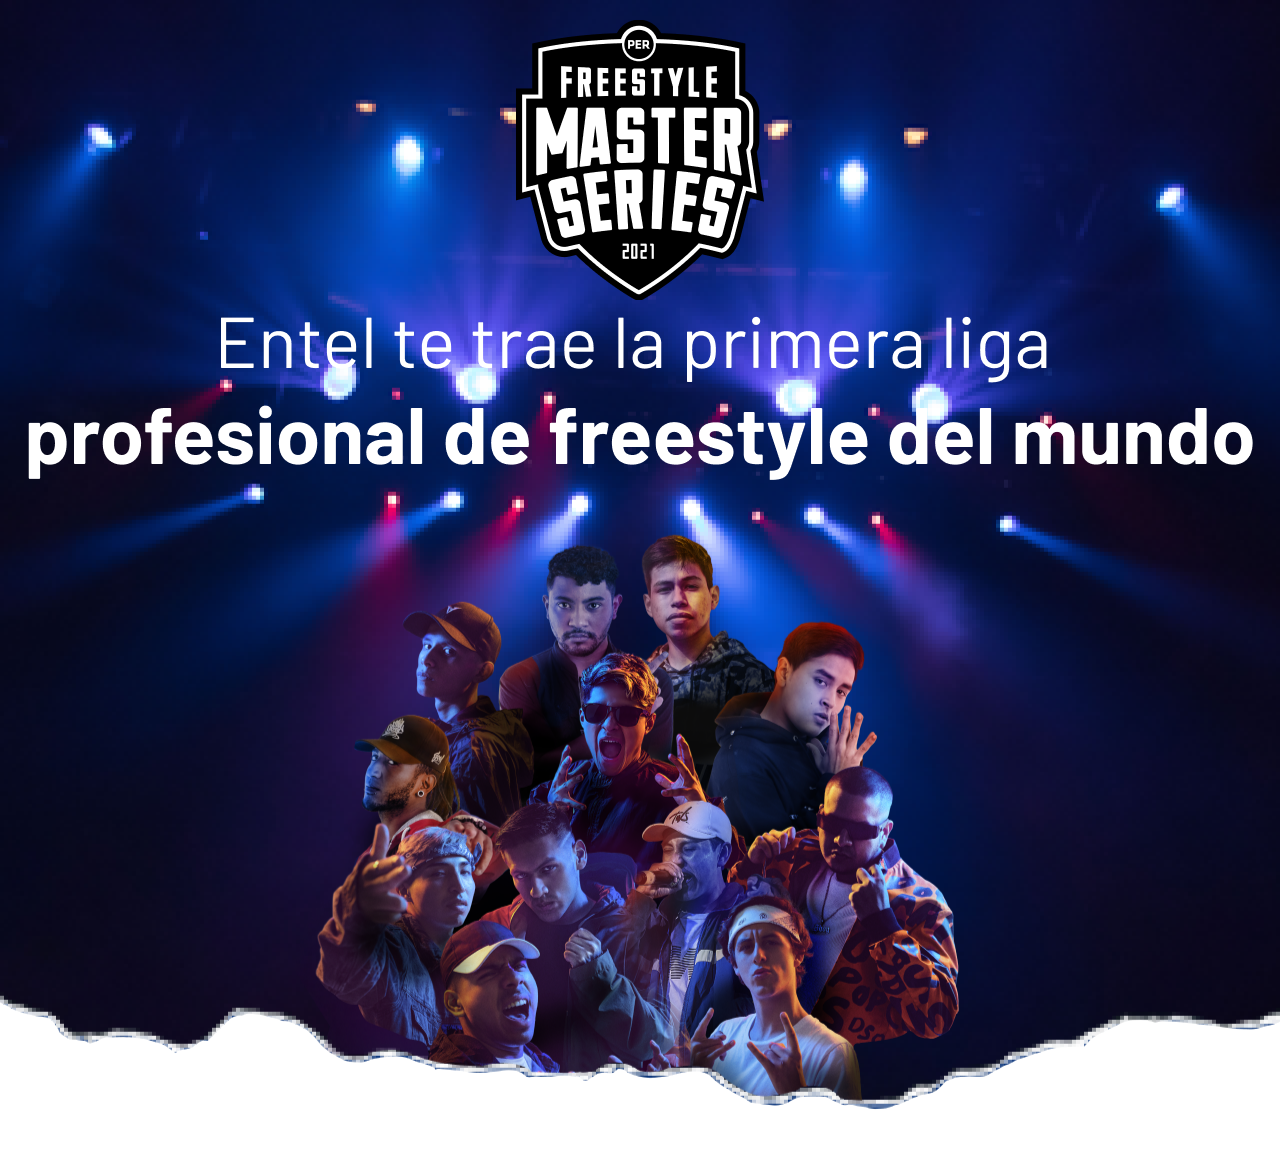 Entel te trae la primera liga profesional de freestyle del mundo - Freestyle Master Series 2020